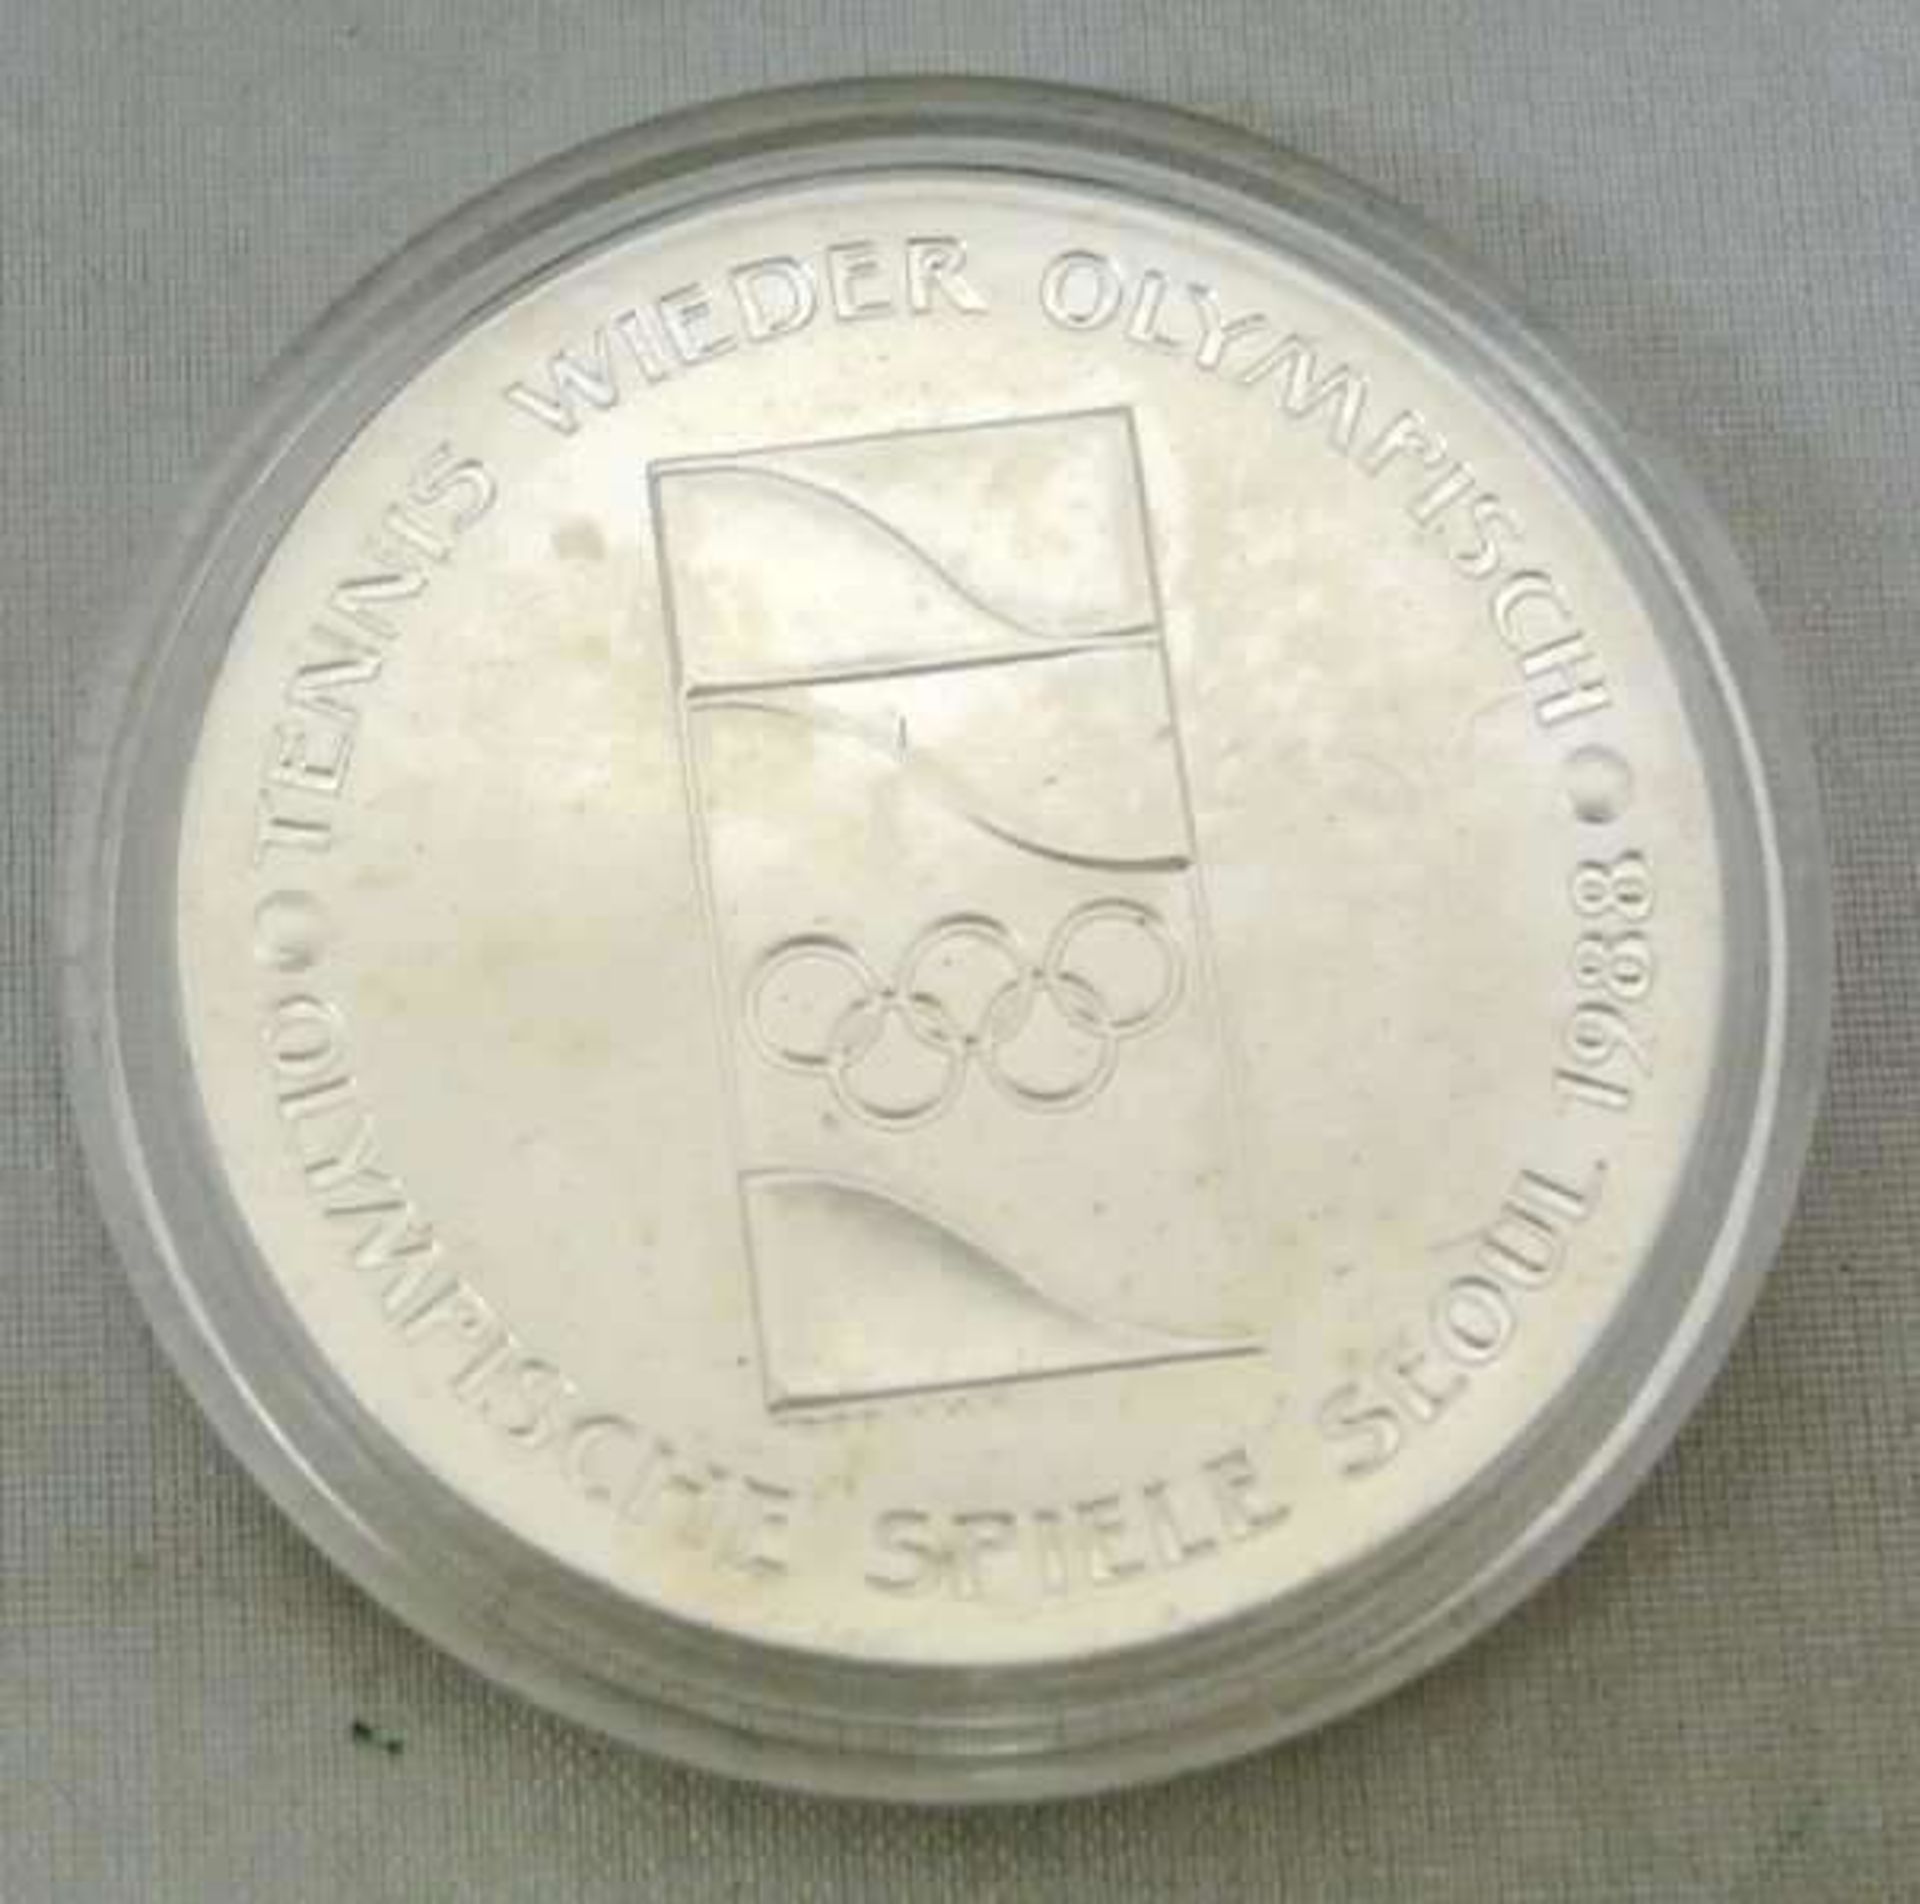 Silber Medaille - 1000er - Steffi Graf Pro Olympia Seoul Tennis 1988, im Original Schatulle - Bild 3 aus 4